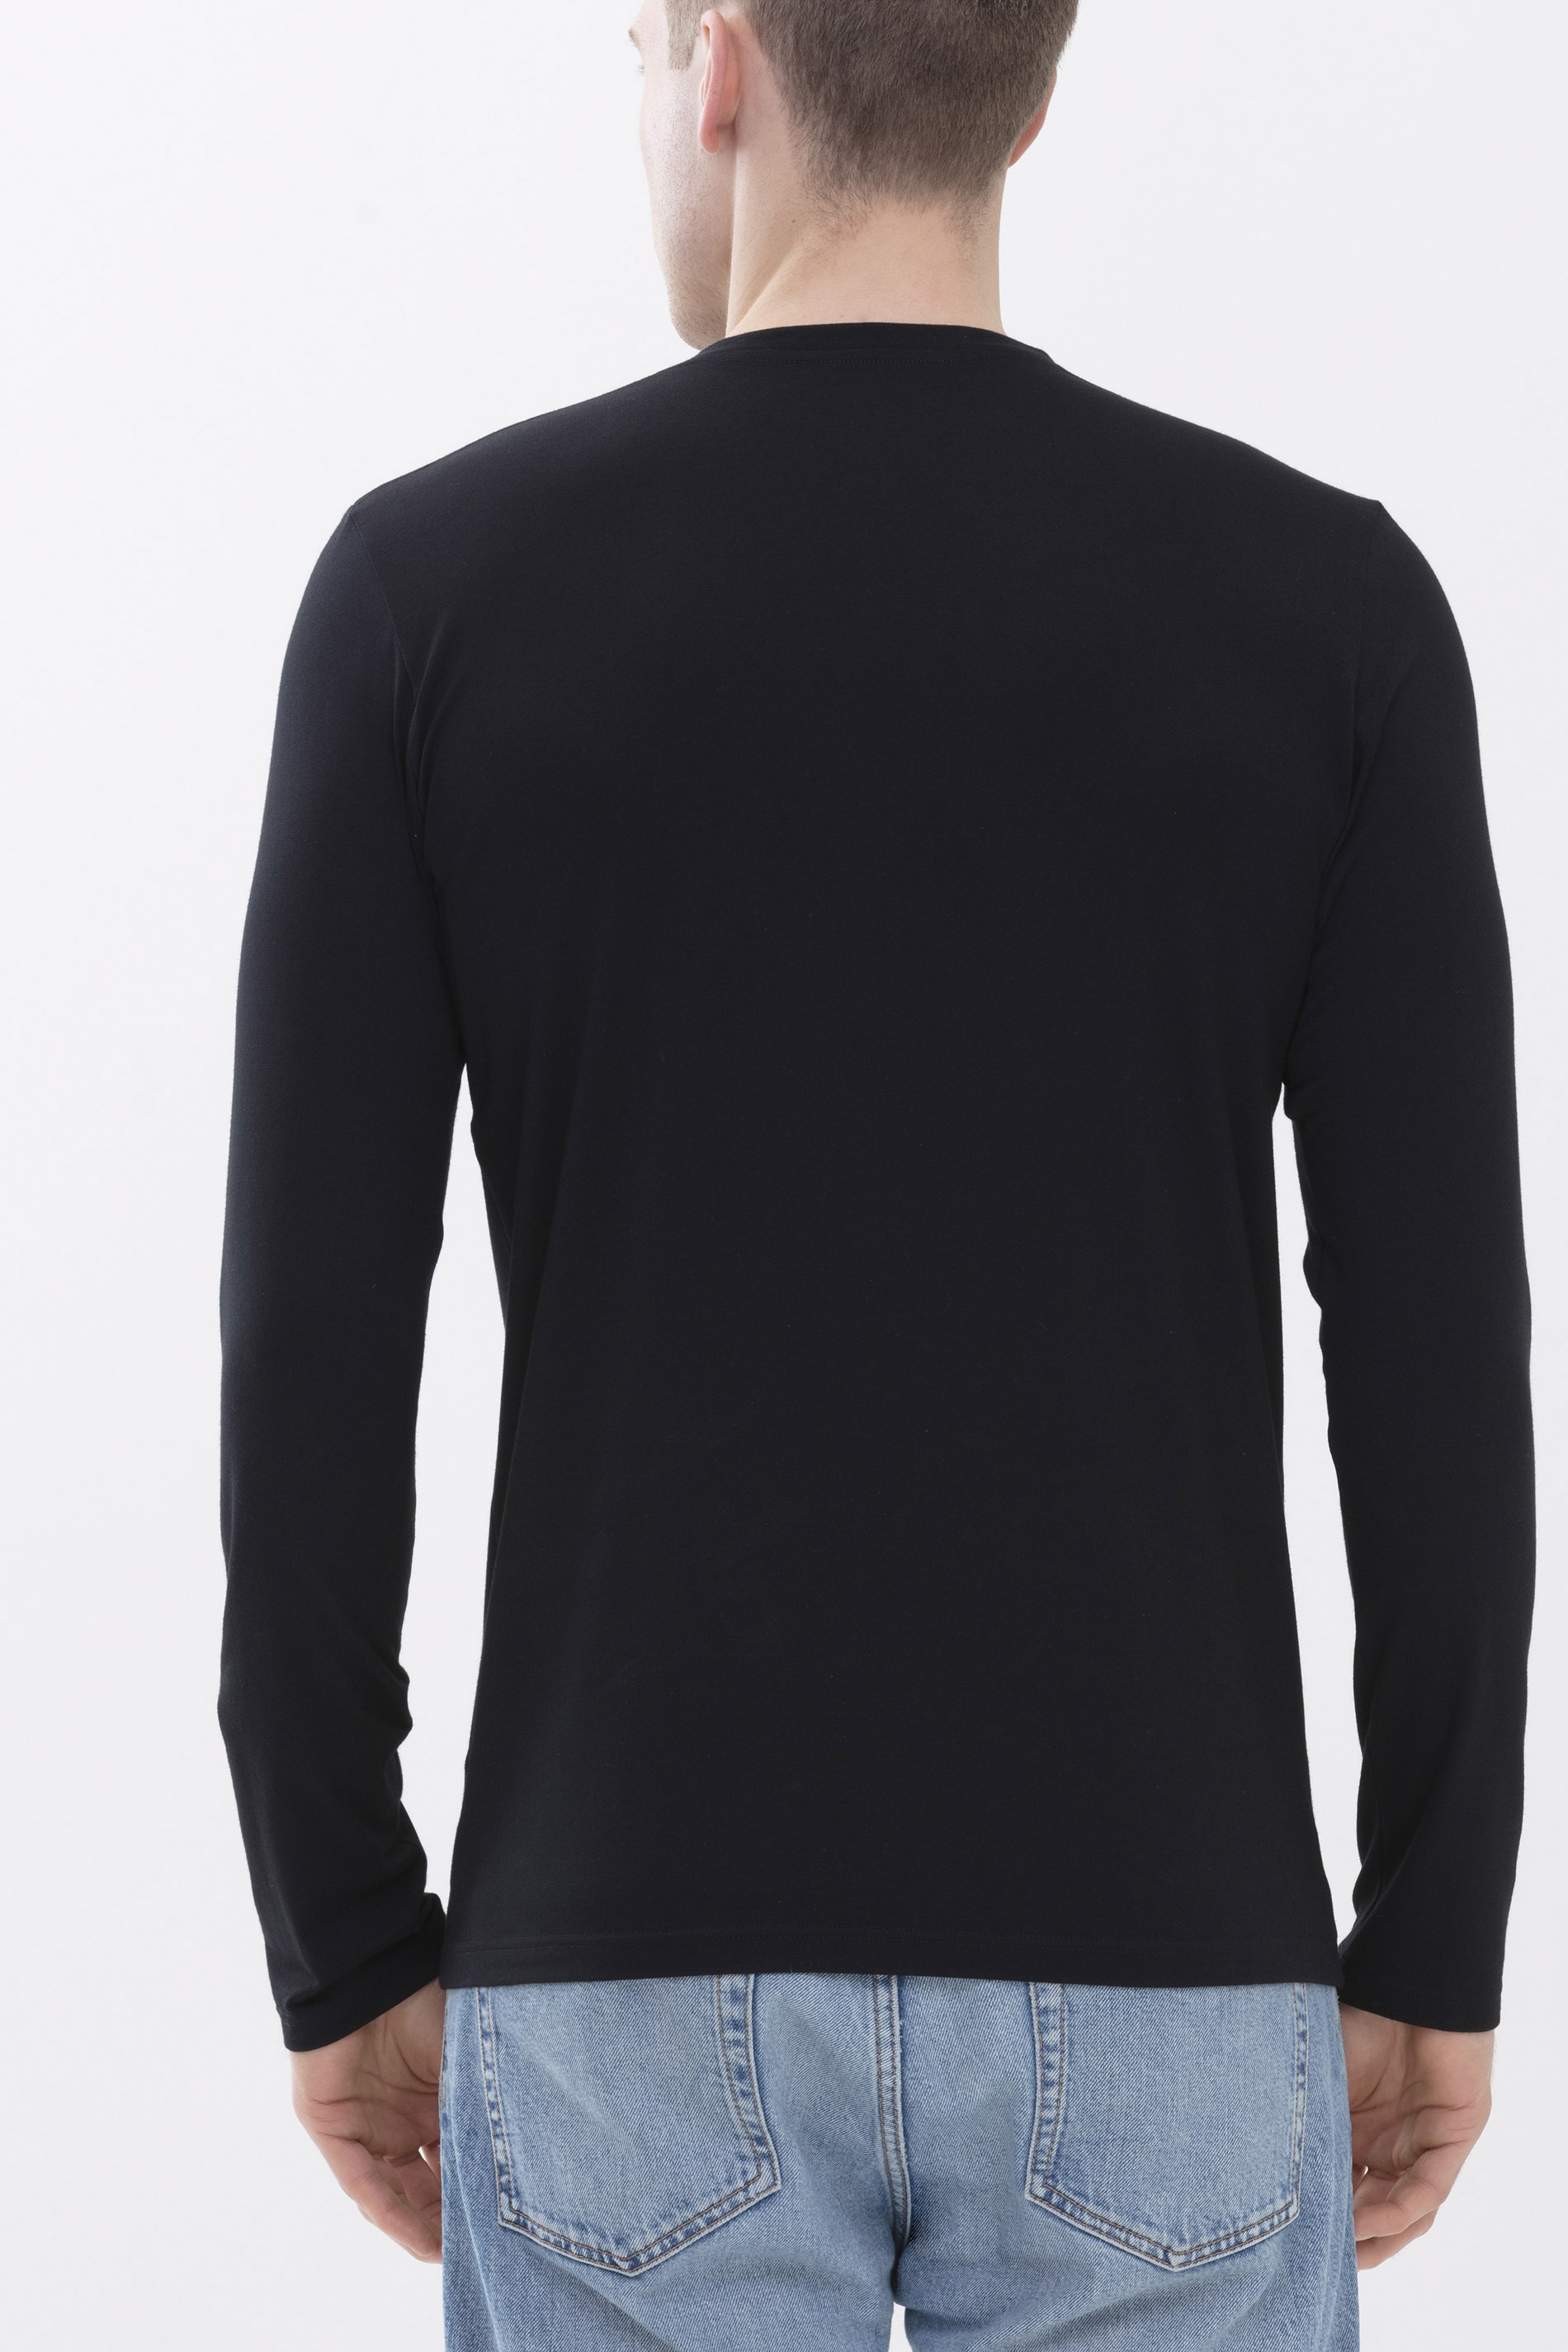 Hybrid-T-Shirt | Long-sleeve Black Serie Hybrid T-Shirt Rear View | mey®